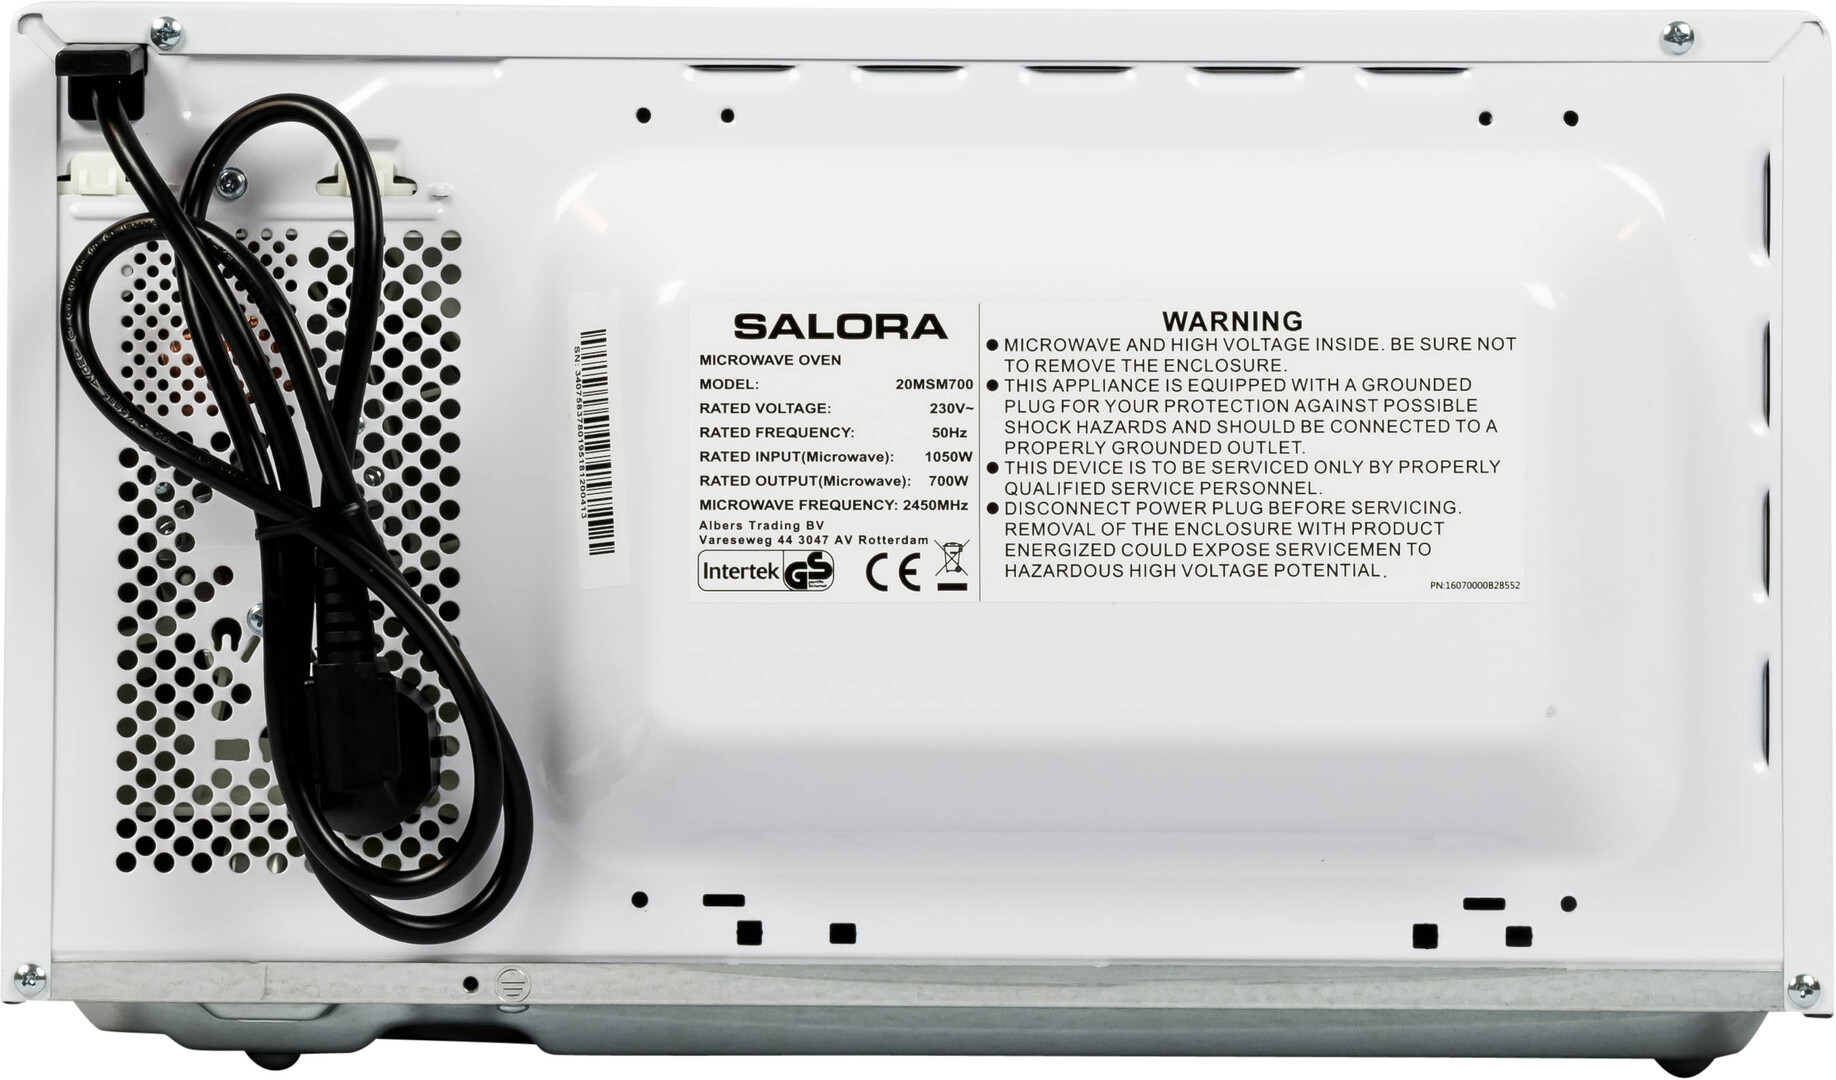 Ga door mixer bezig Salora 20MSM700 magnetron - Hardware Info